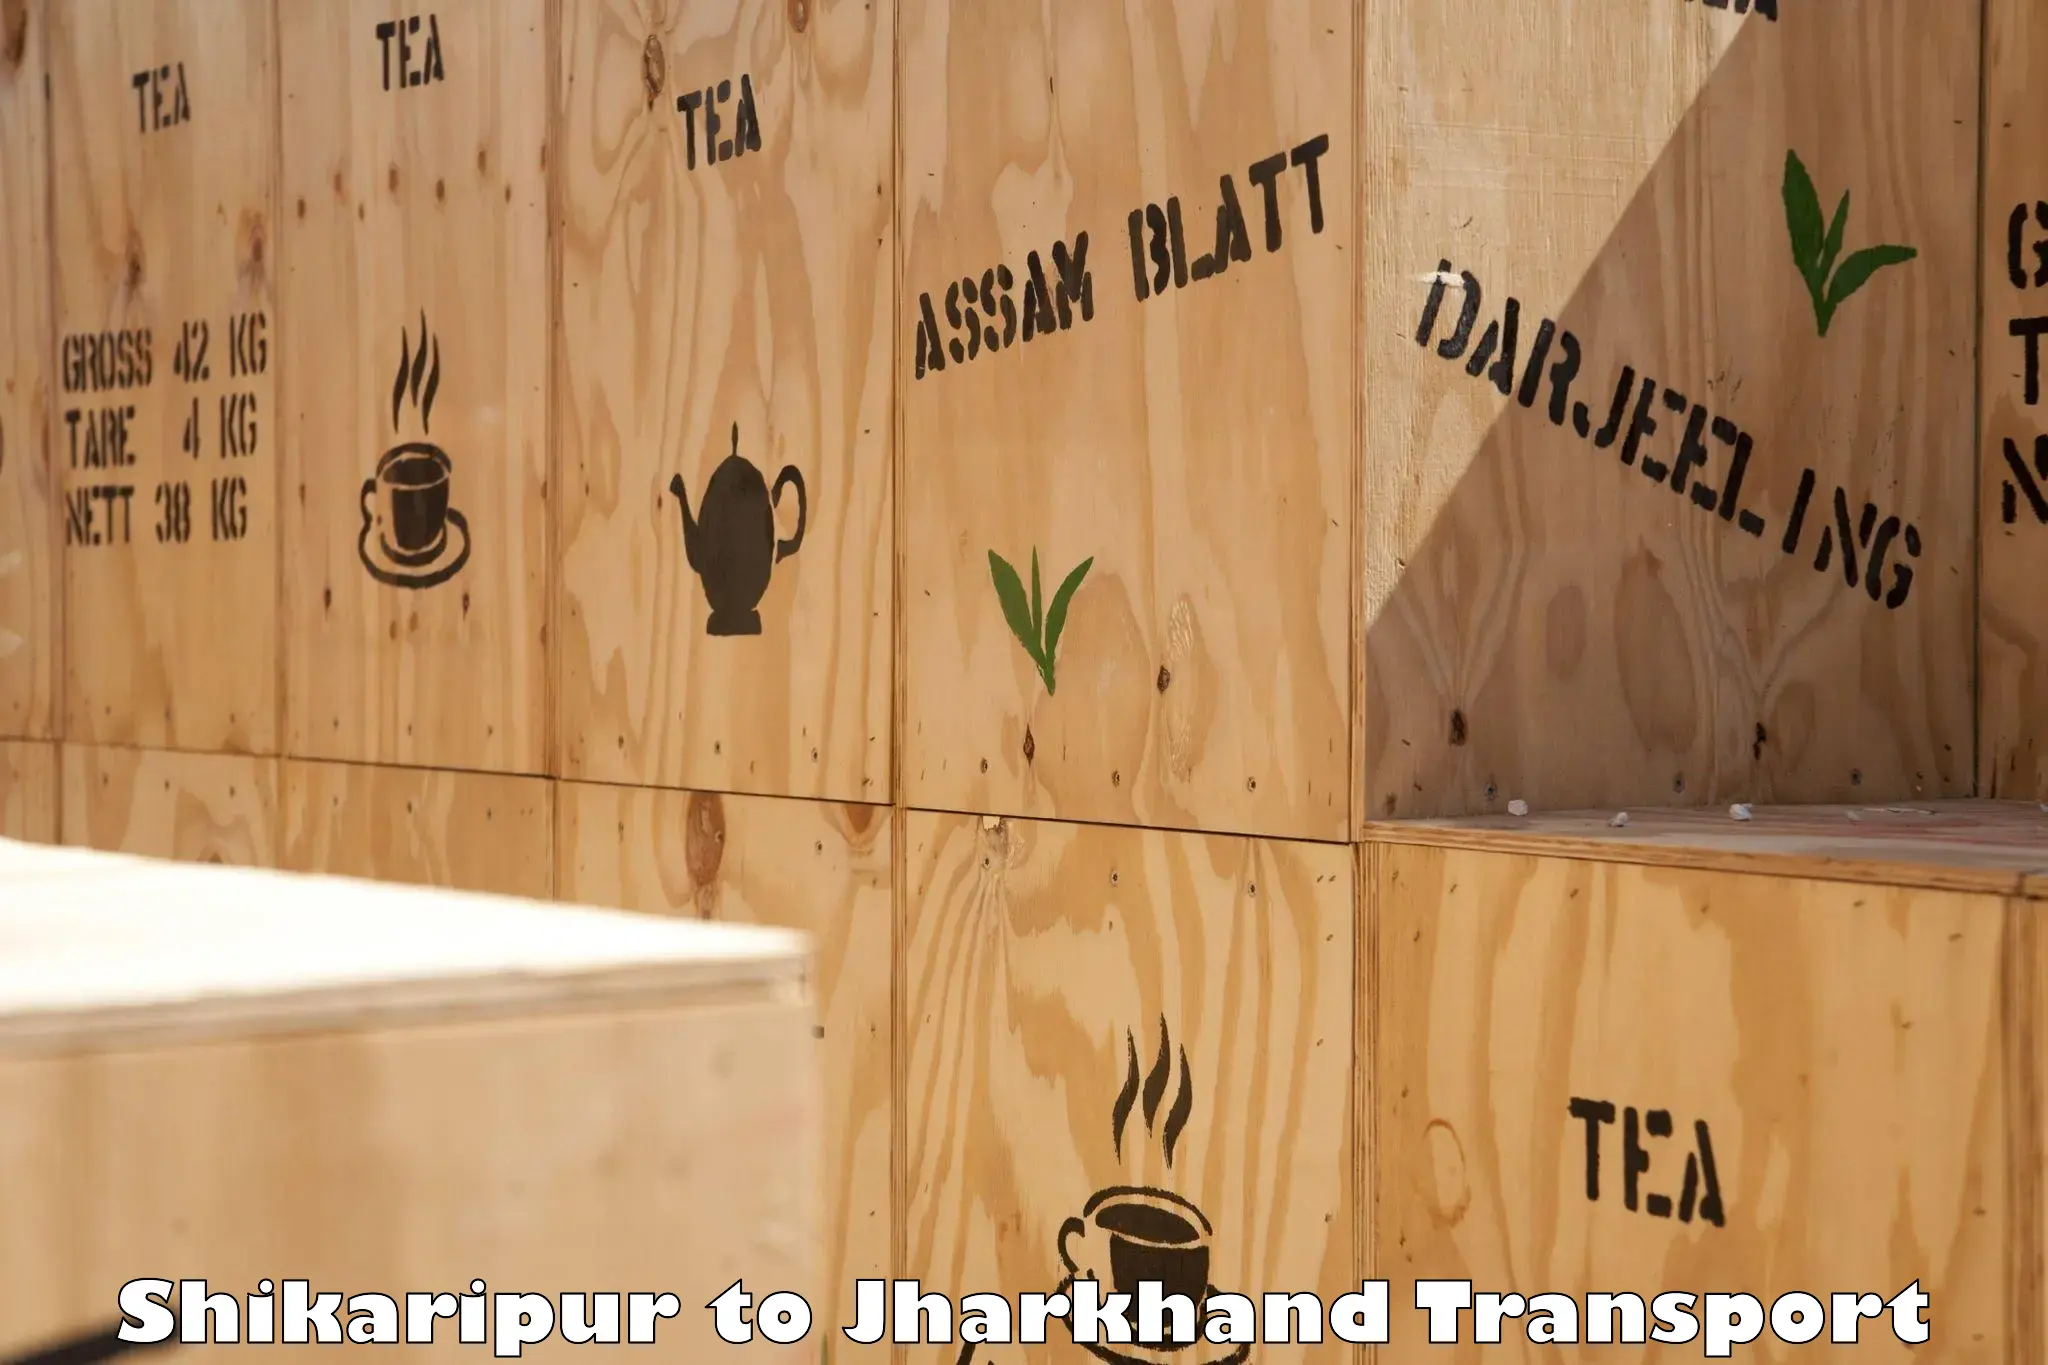 Container transport service Shikaripur to Seraikella